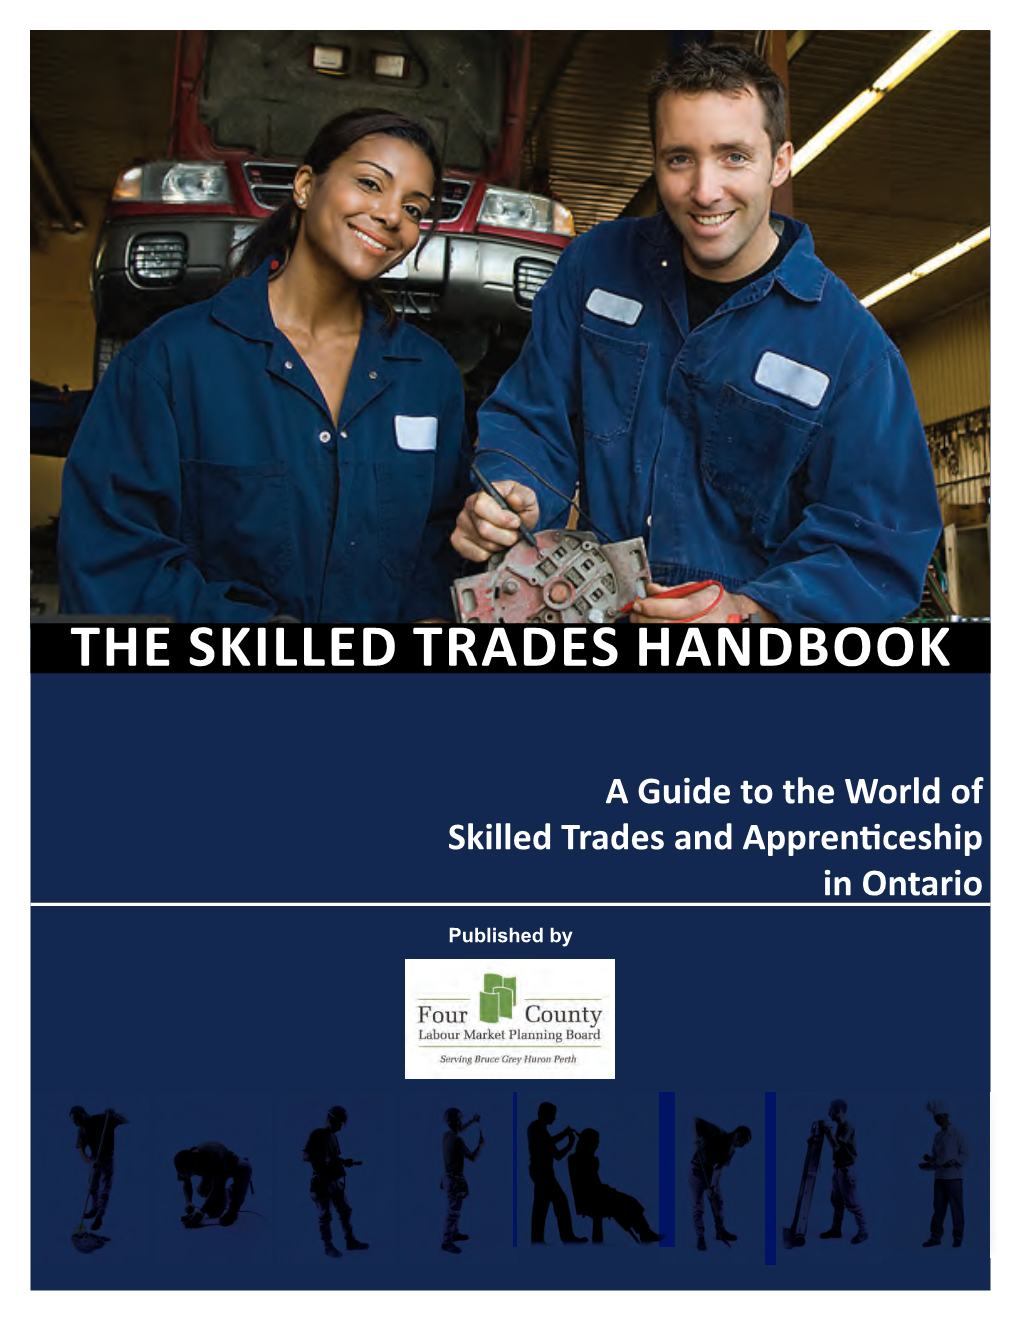 View the Skilled Trades Handbook